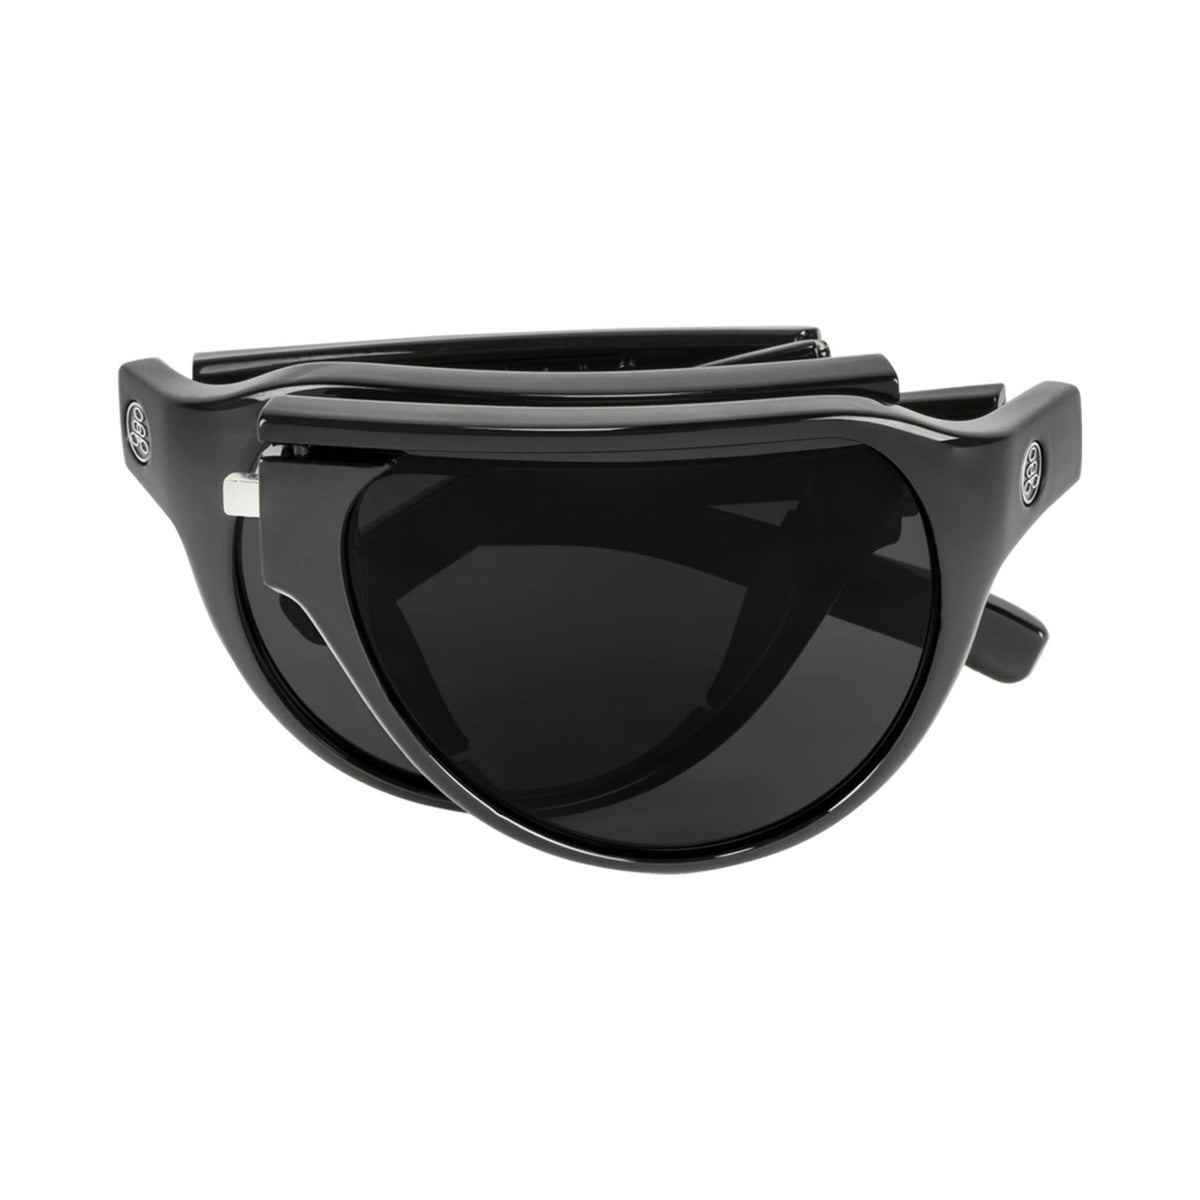 Popticals, Premium Compact Sunglasses, PopAir, 300010-BGGP, Polarized Sunglasses, Gloss Black Frame, Gray Lenses, Compact View